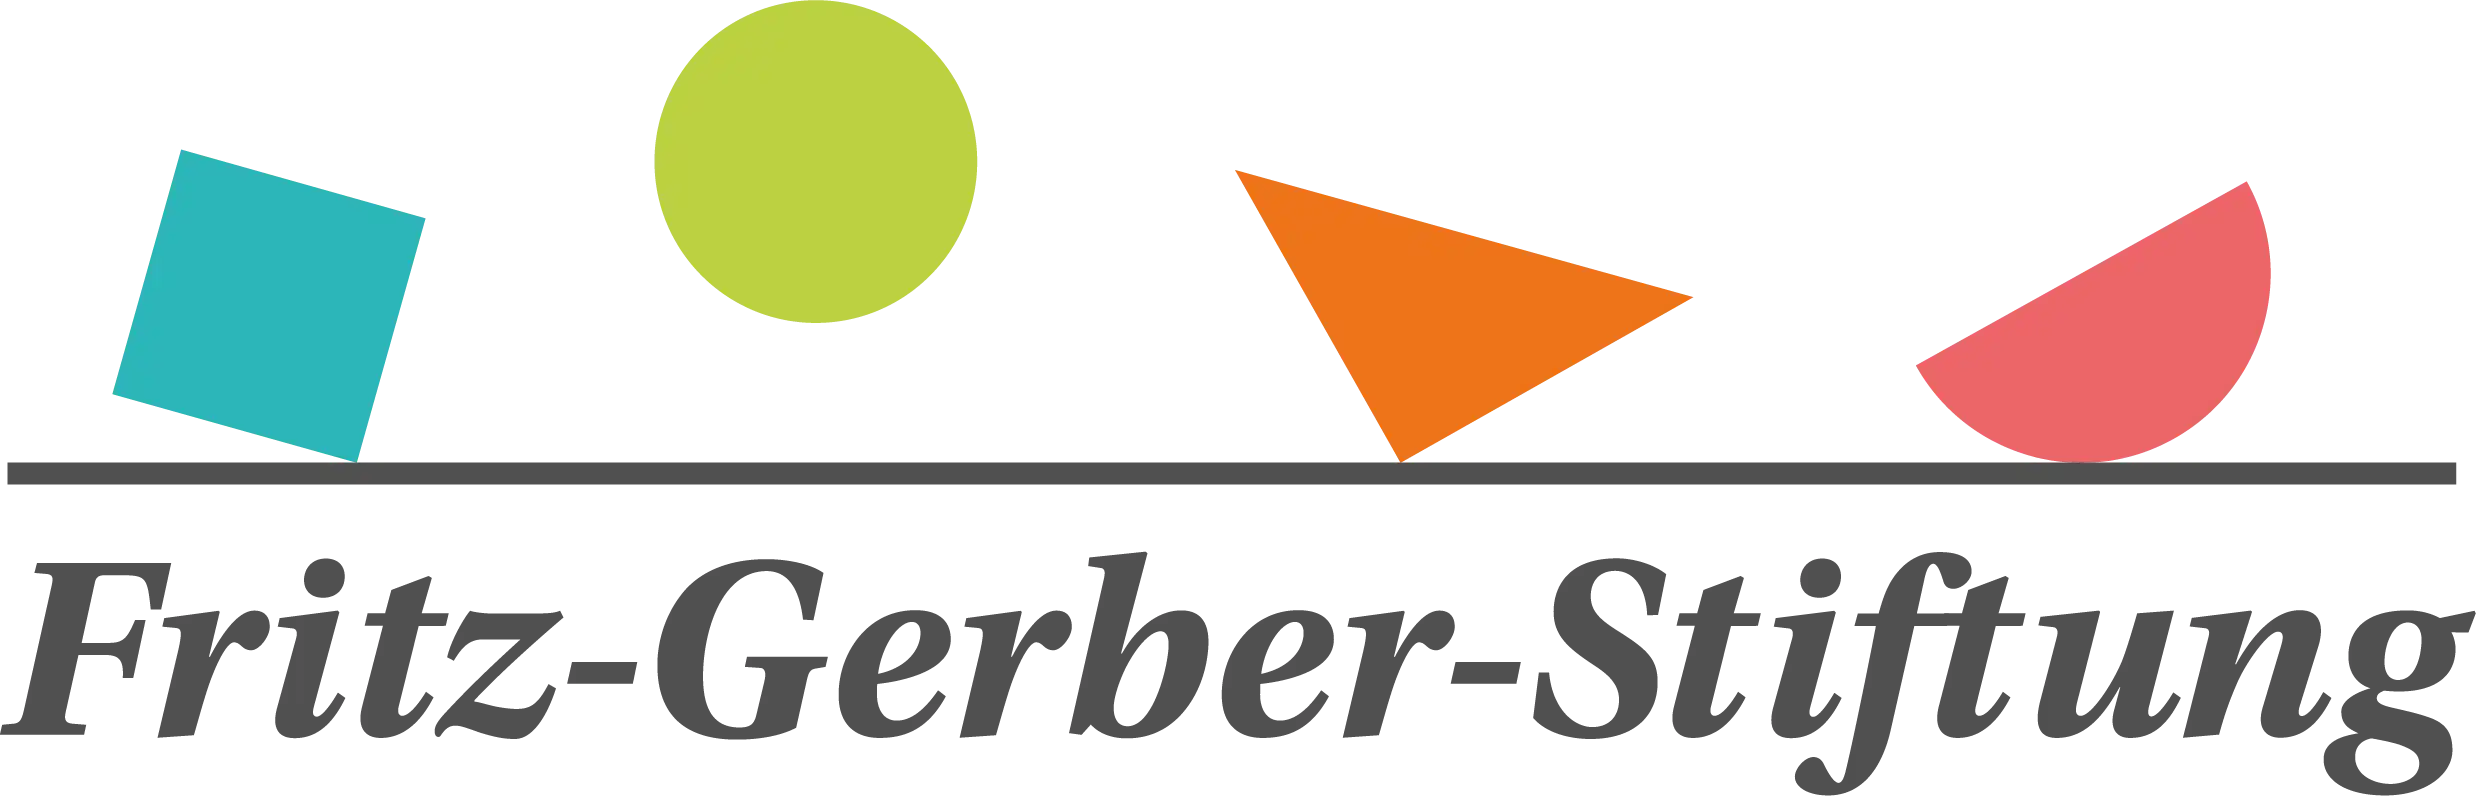 Fritz Gerber Stiftung Logo